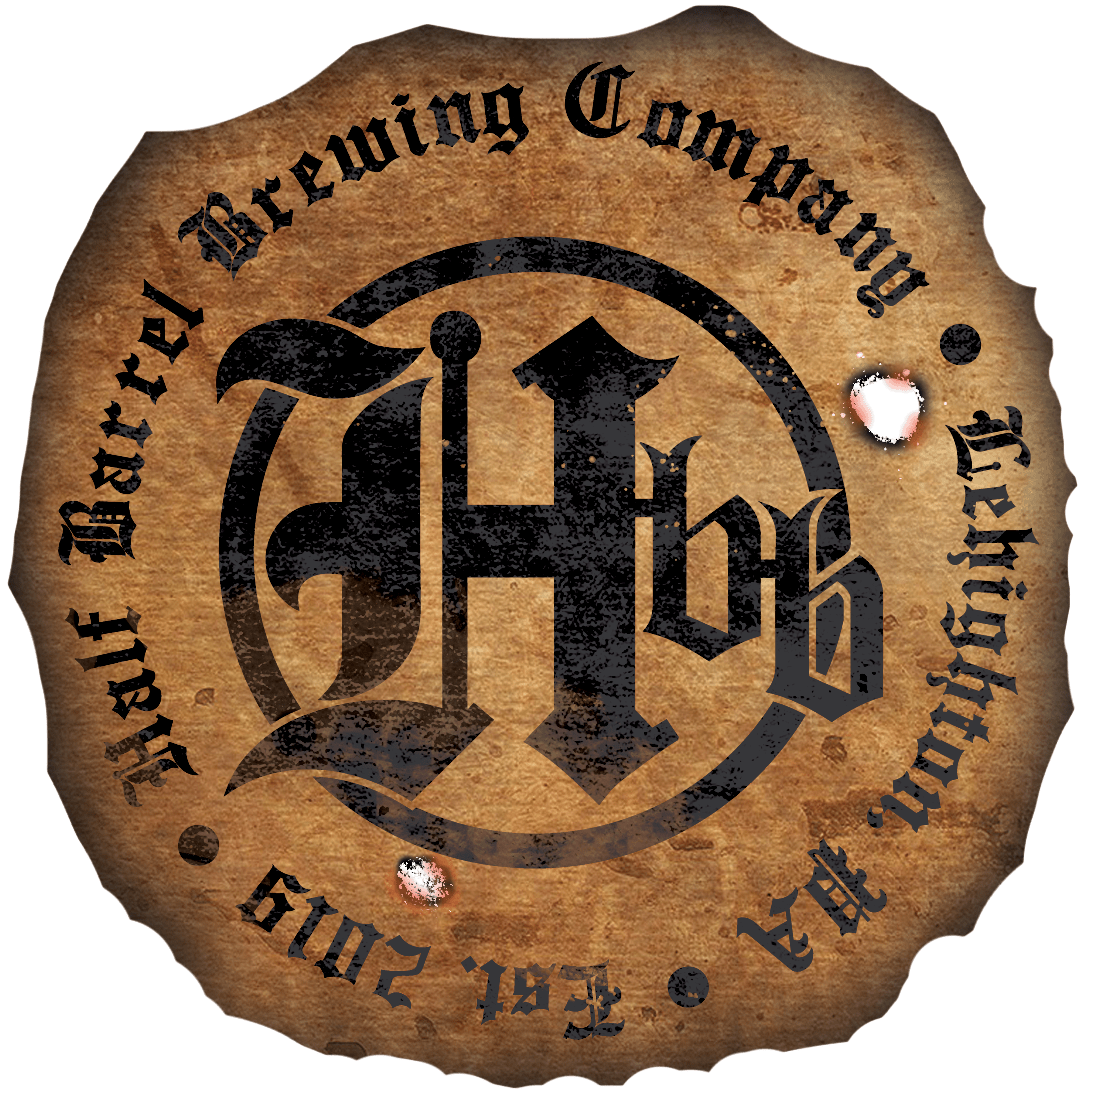 Half Barrel Brewing Company